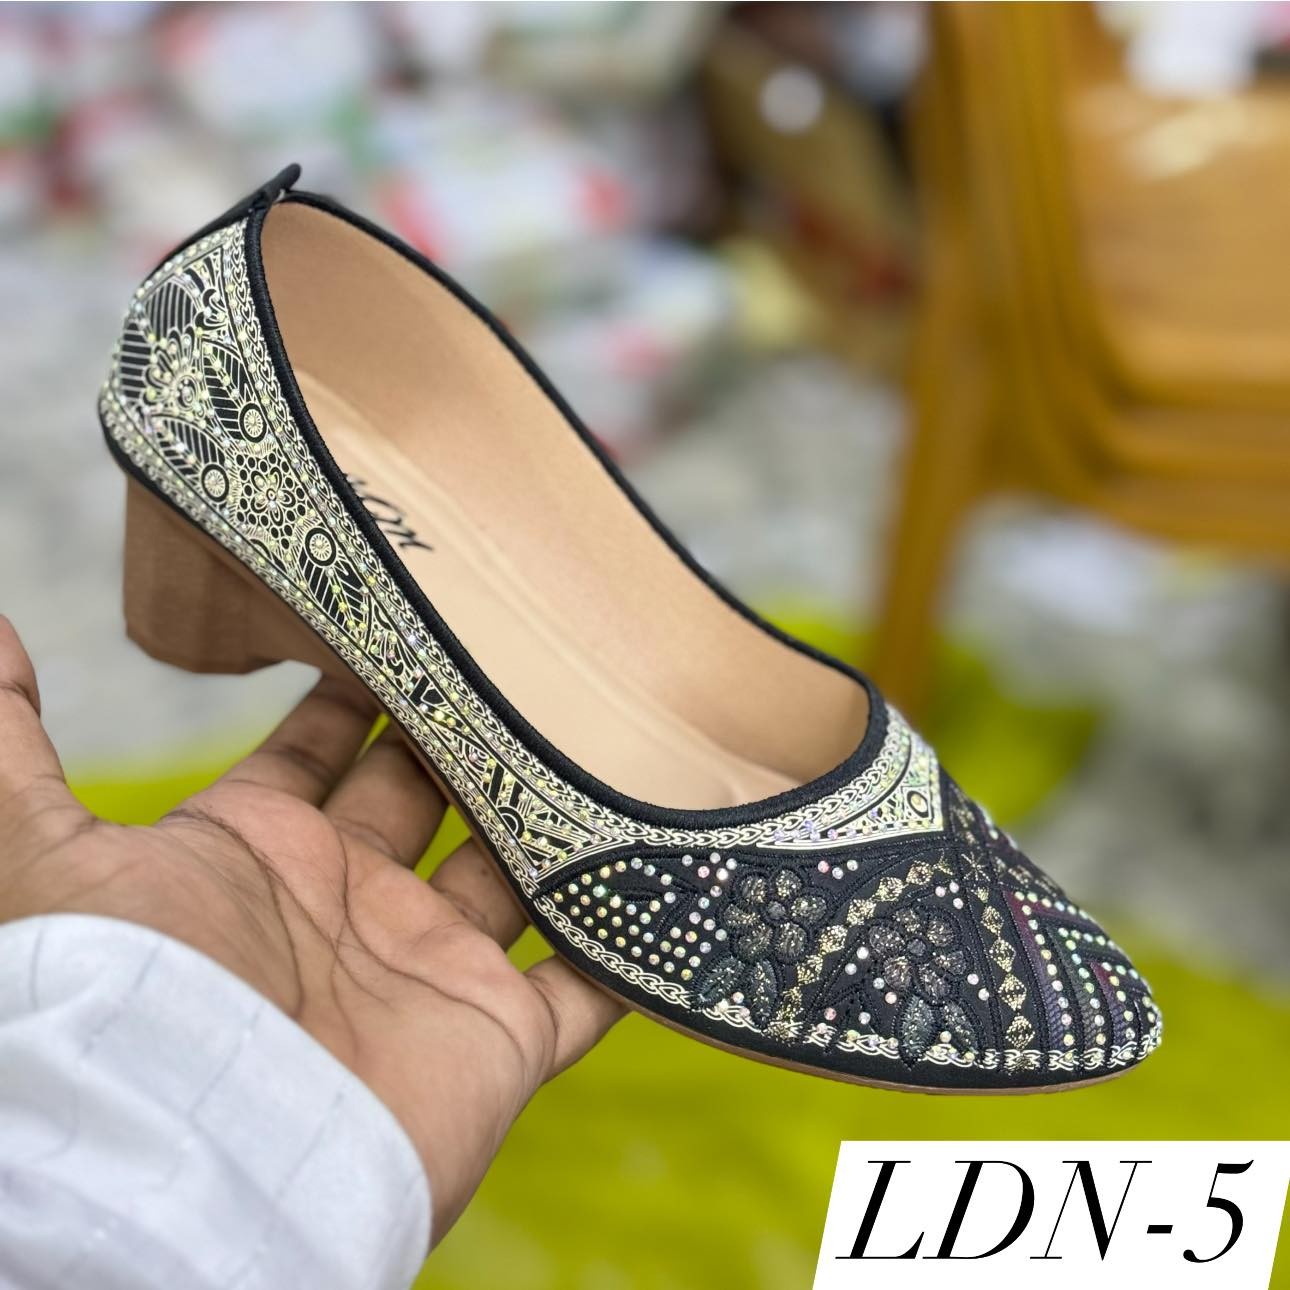 Exclusive ladies shoe (LDN 5)